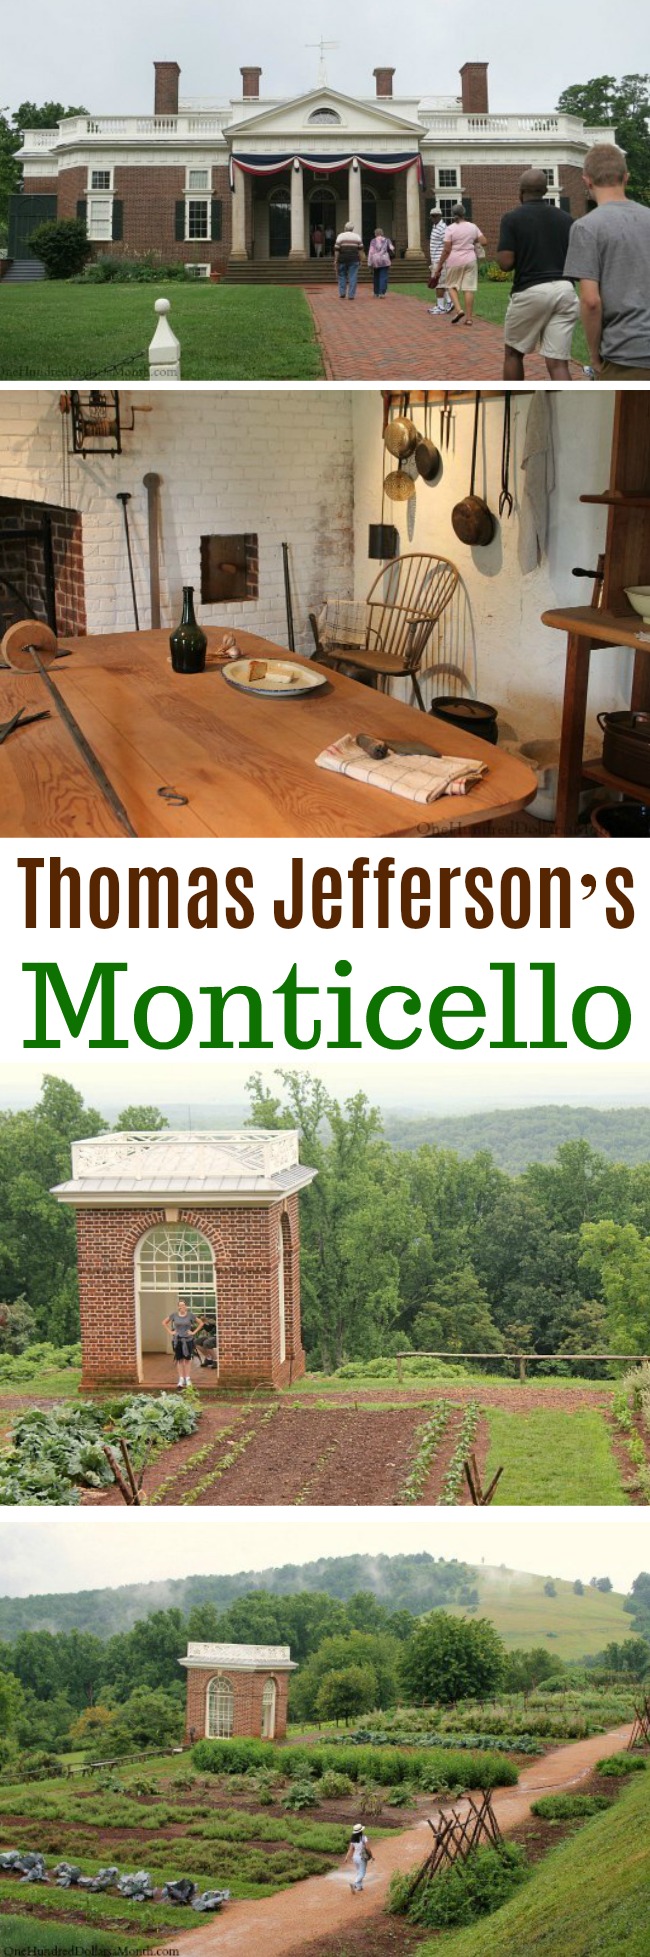 Thomas Jefferson’s Monticello